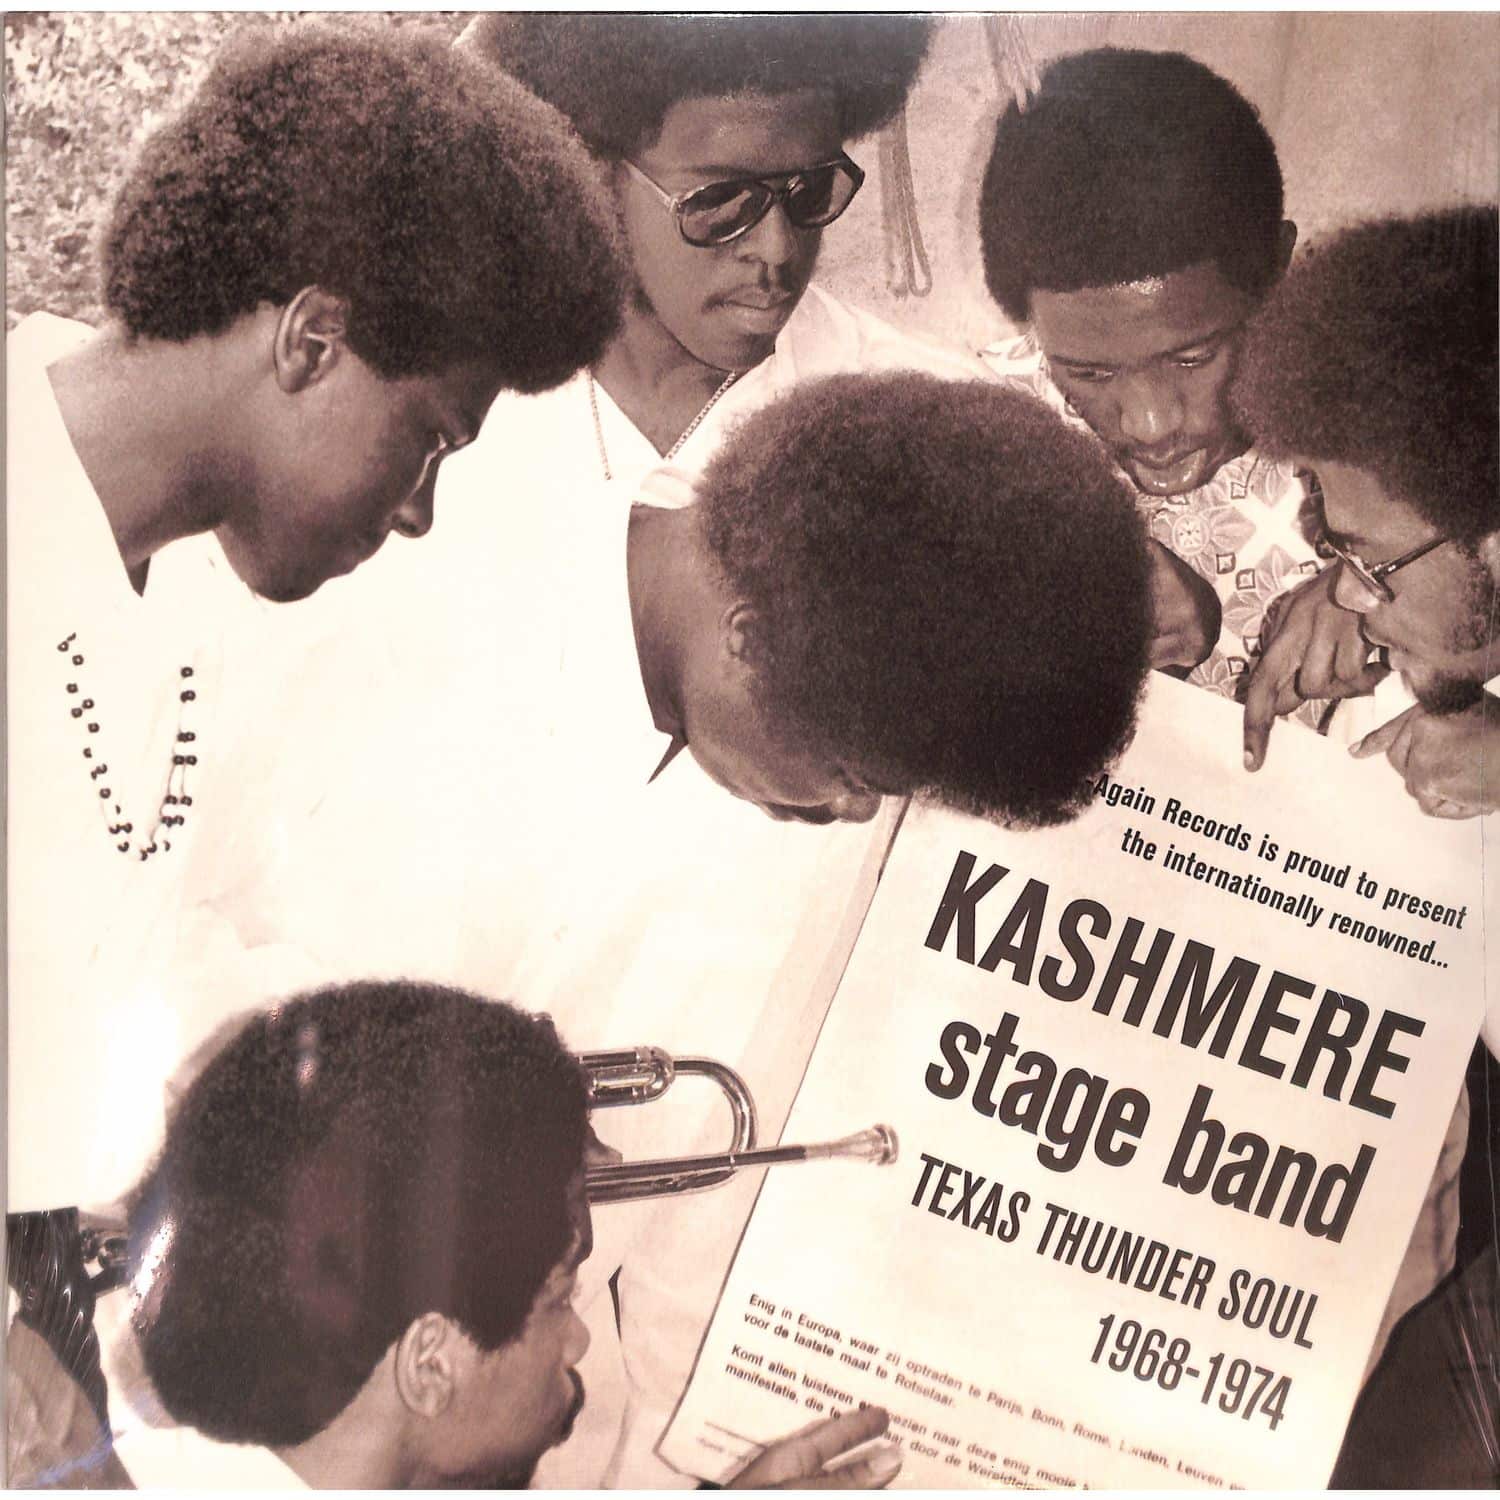 Kashmere Stage Band - TEXAS THUNDER SOUL 1968-1974 